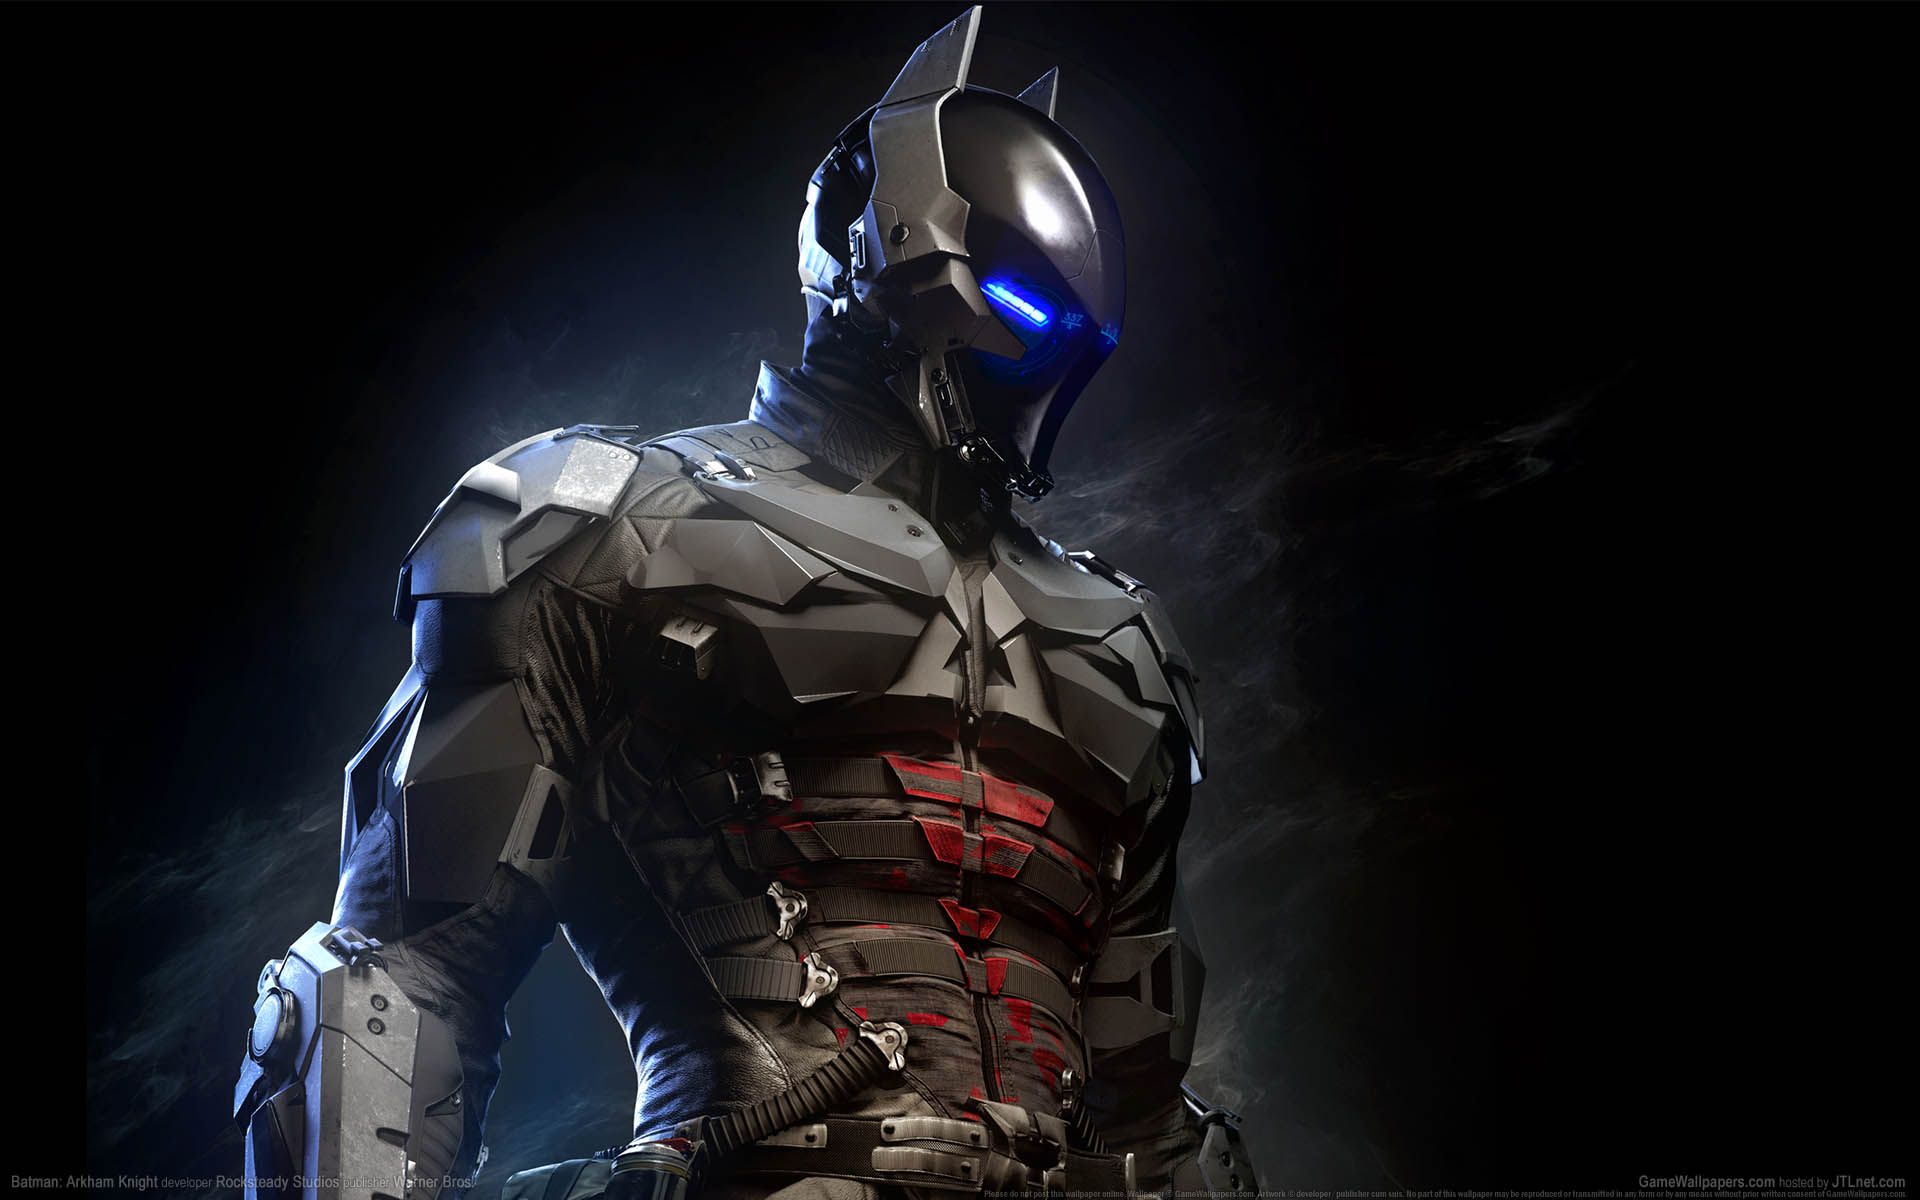 Arkham Knight Armor - Skyrim Mod Requests - The Nexus Forums